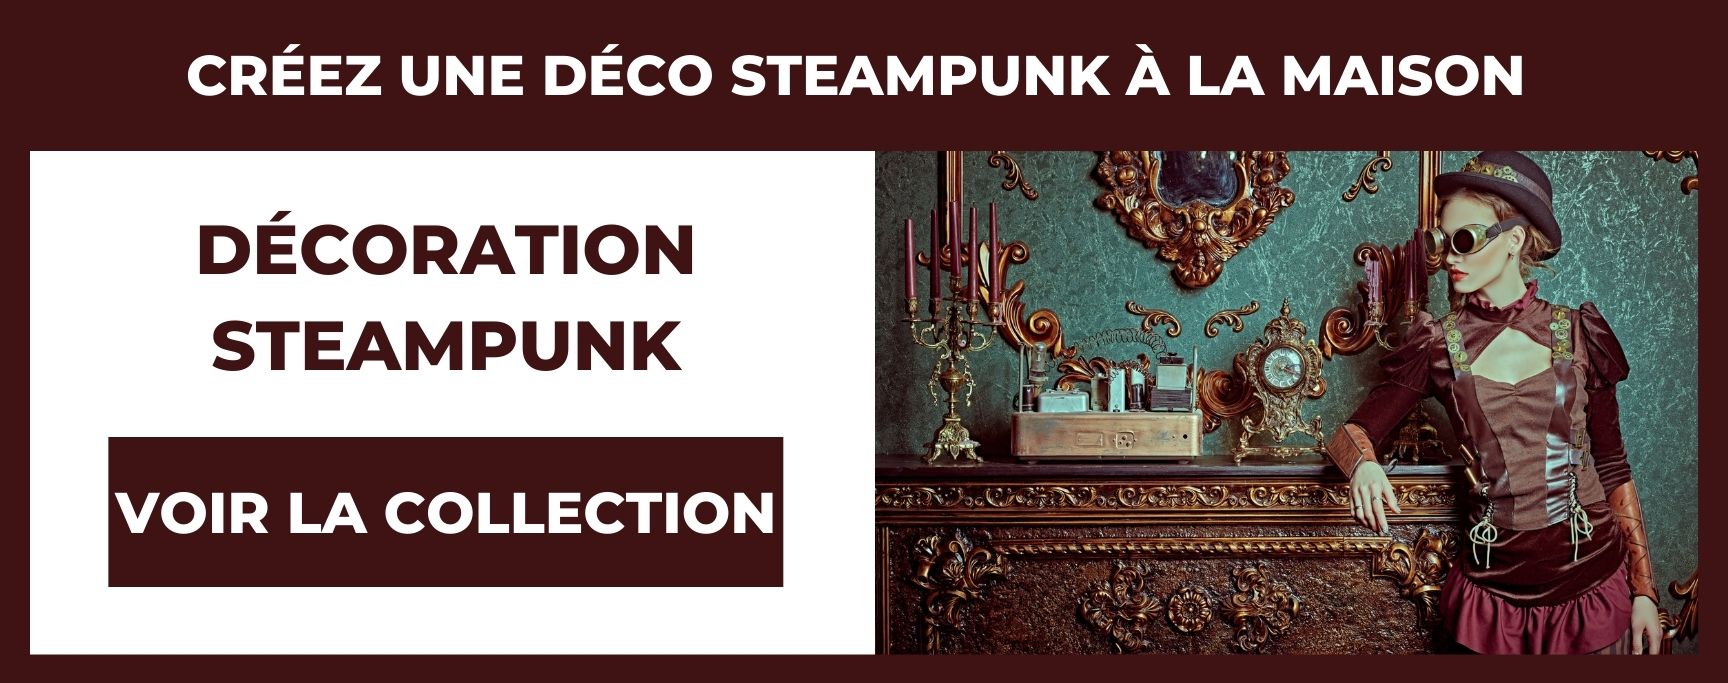 décoration steampunk